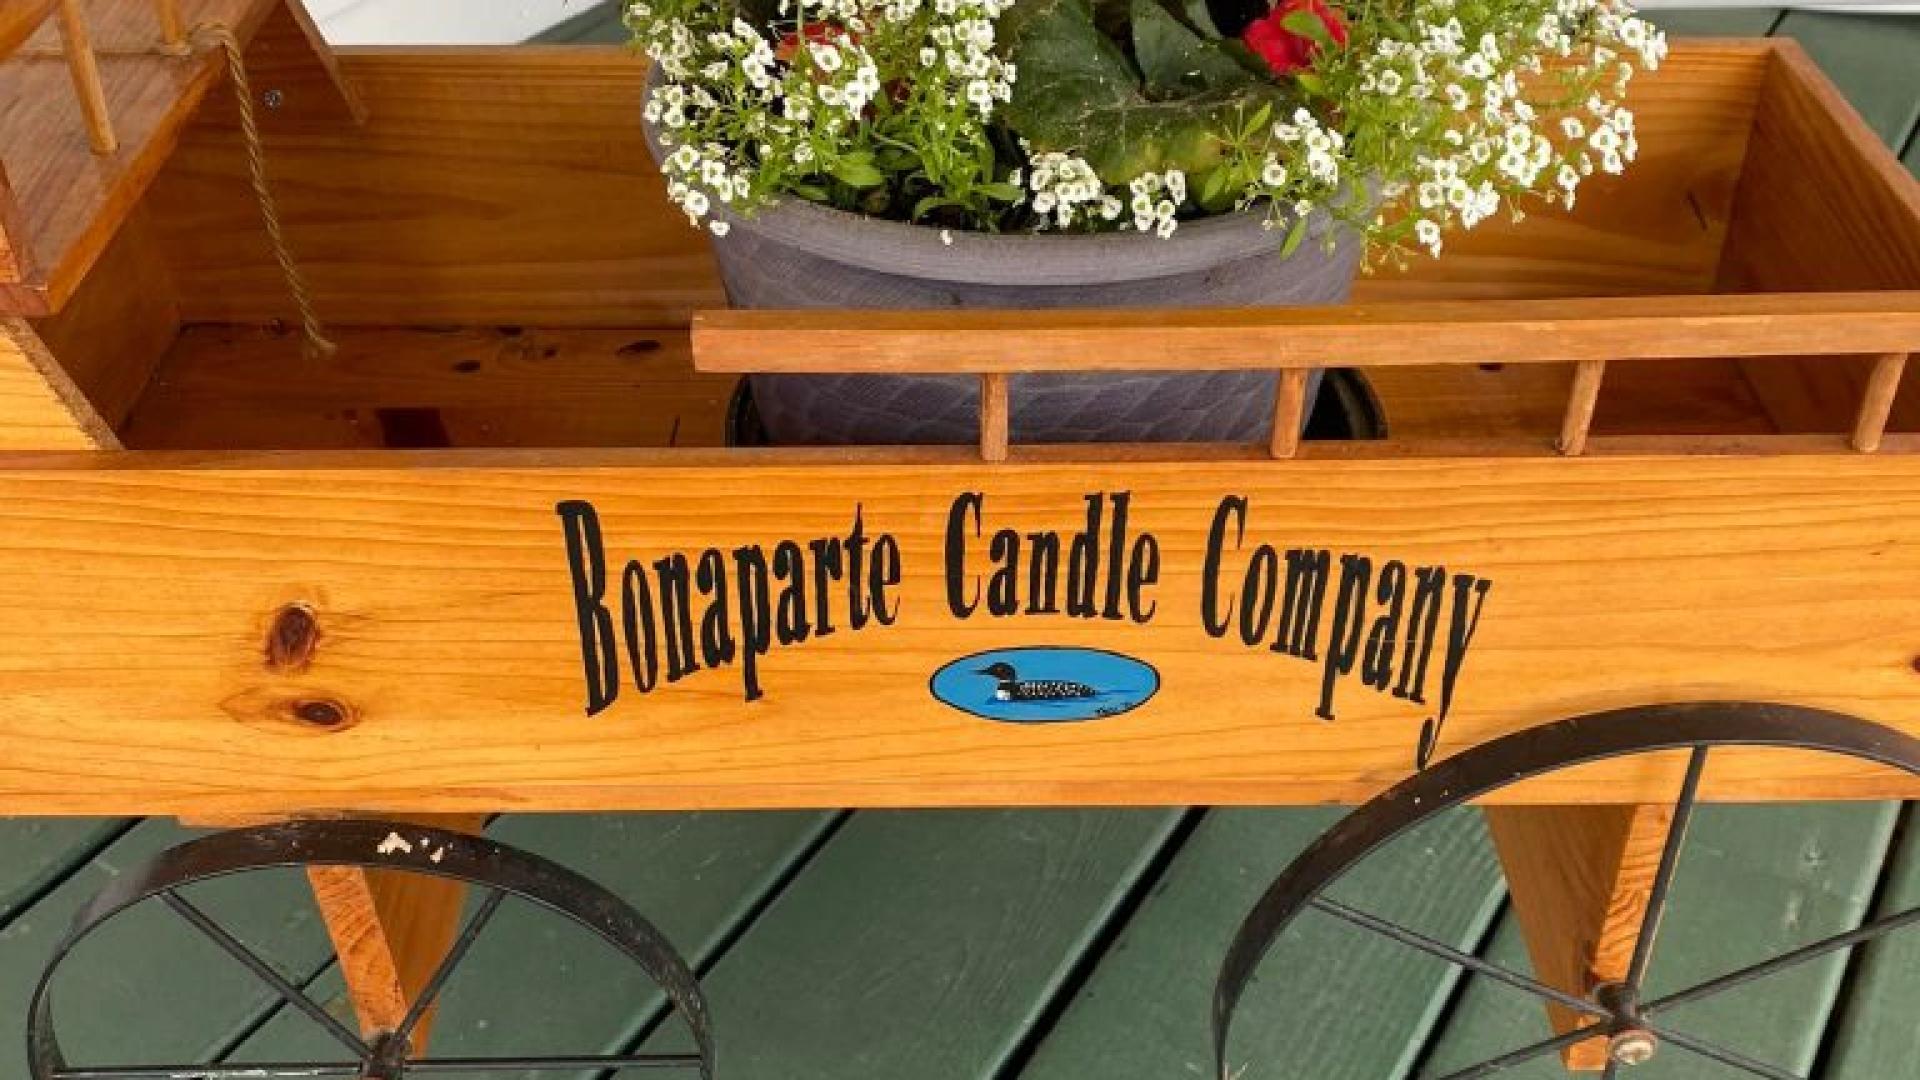 Bonaparte Candle Company